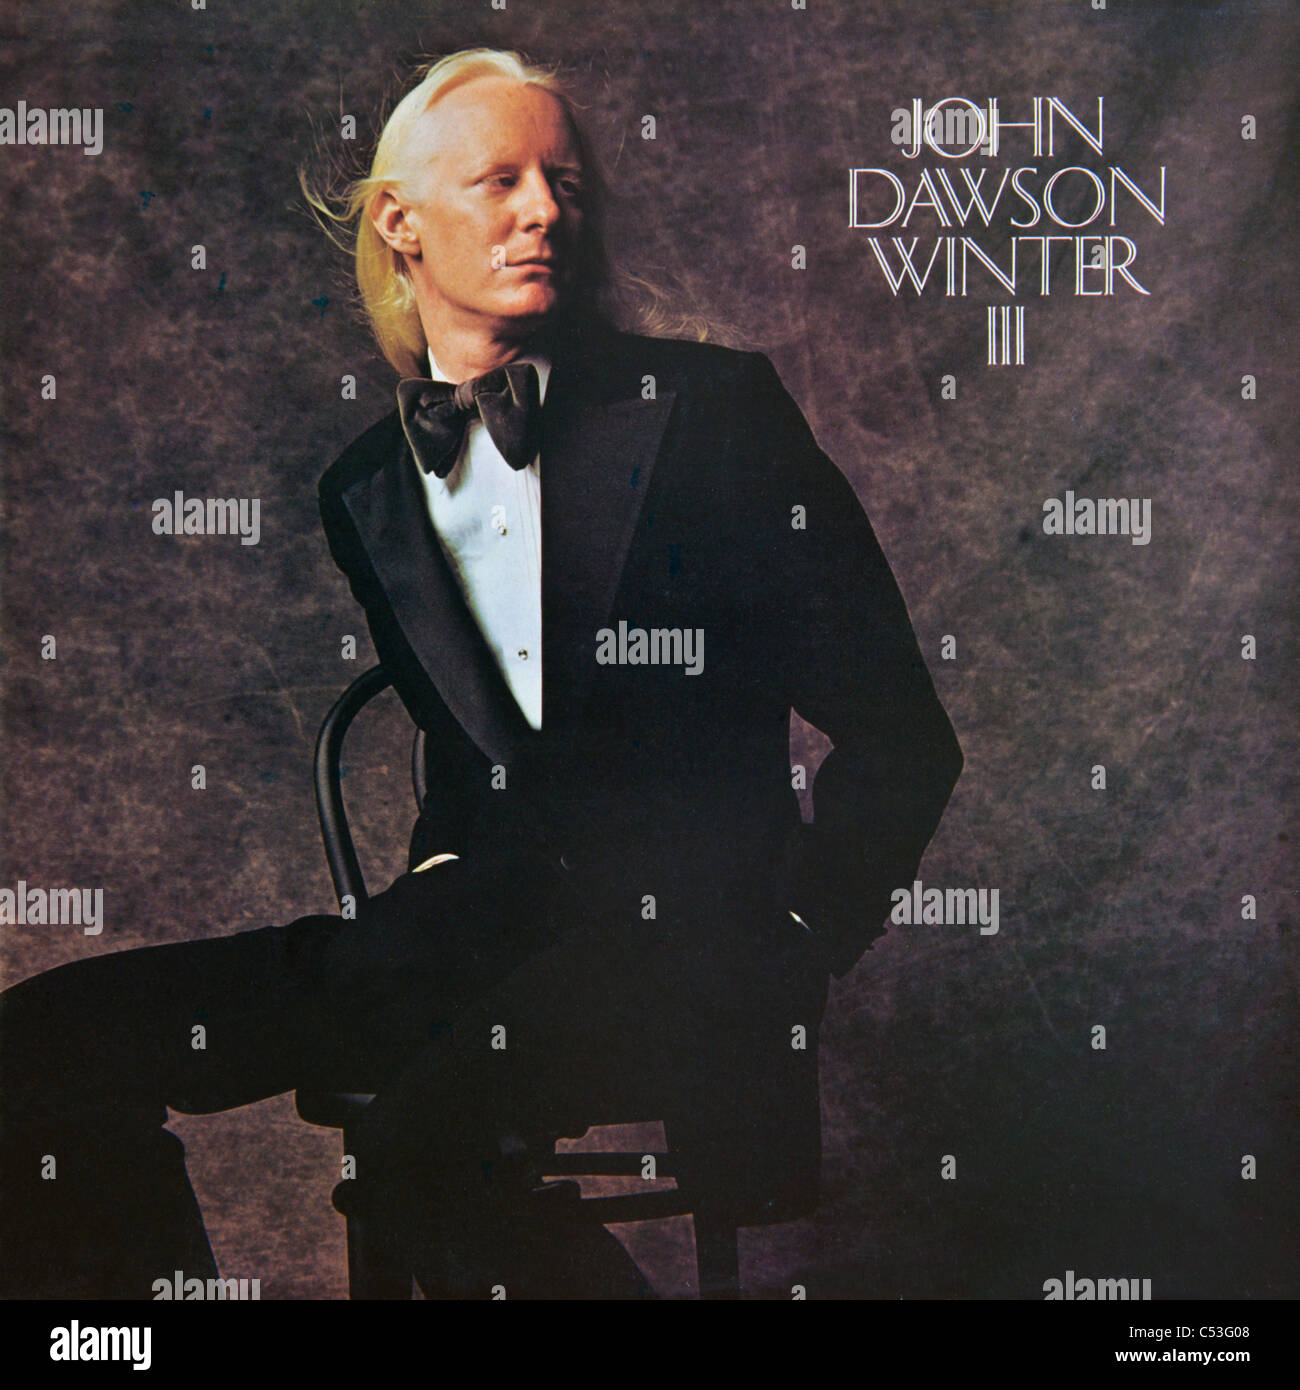 Cover of original vinyl album John Dawson Winter III by Johnny Winter released 1974 on Blue Sky records Stock Photo